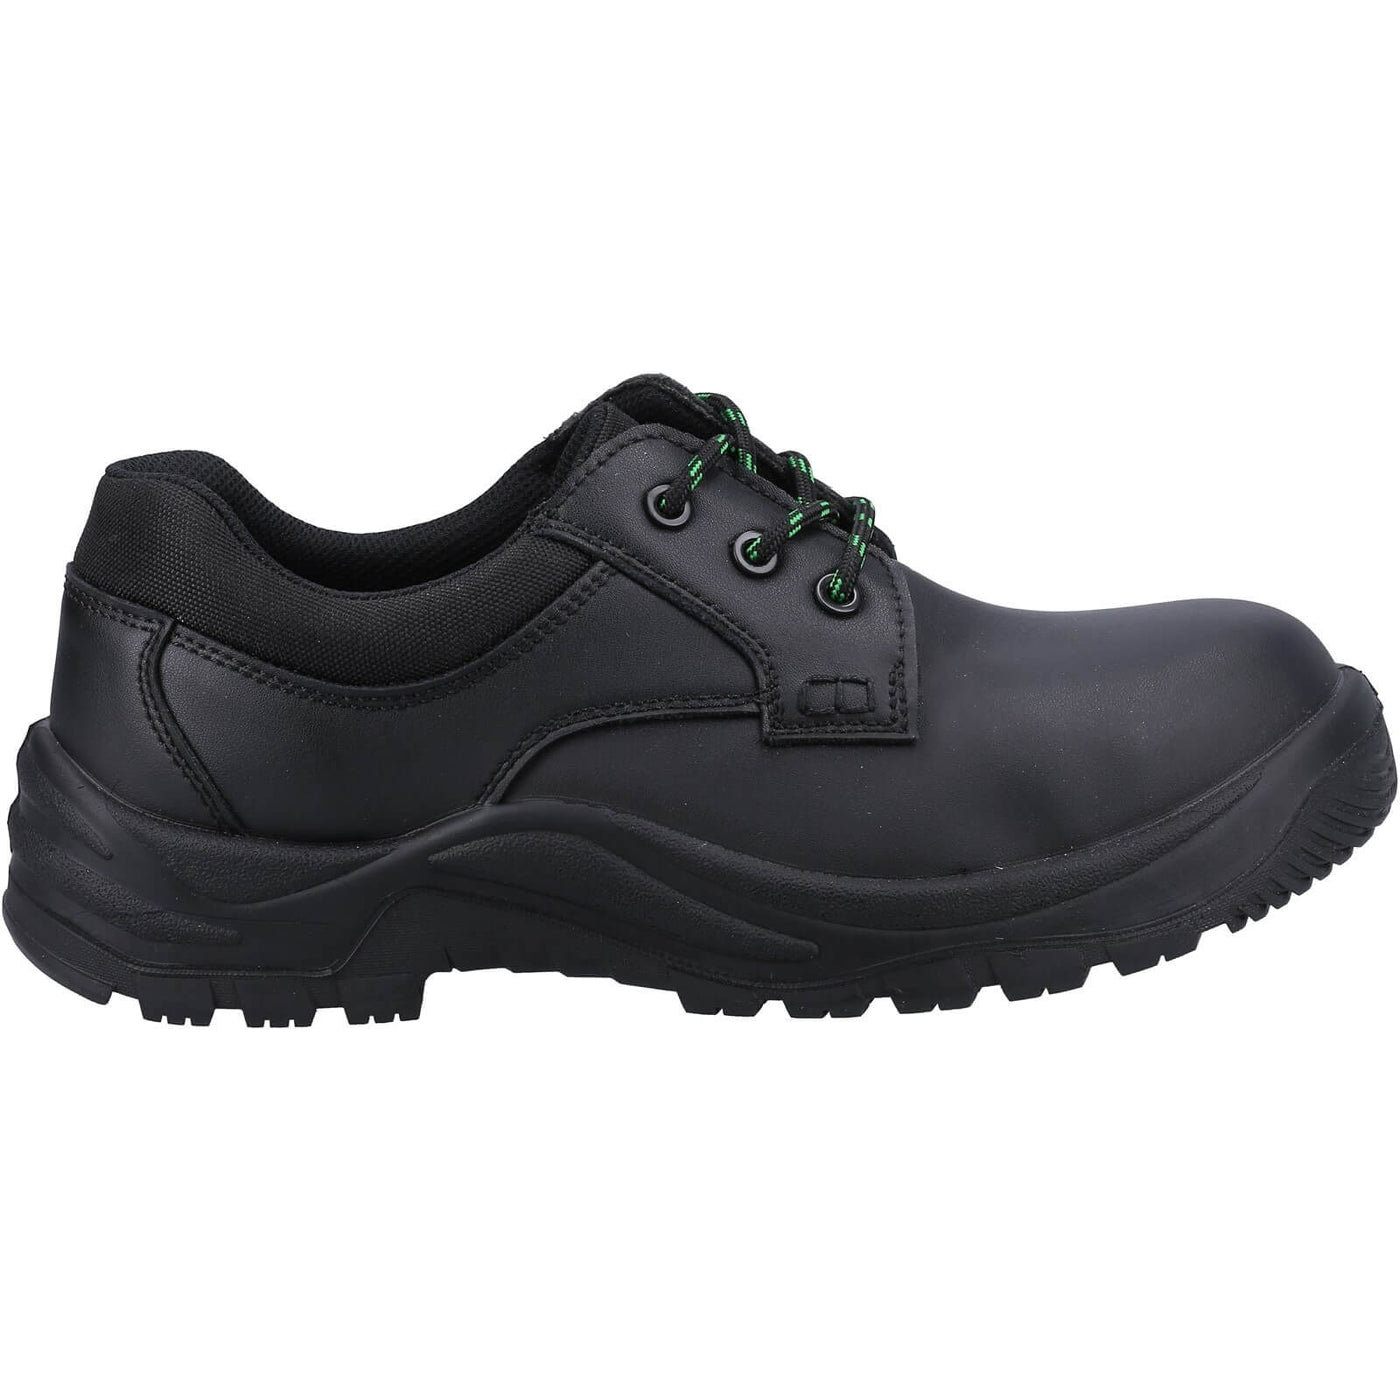 Amblers 504 Metal-Free Safety Shoes Black 4#colour_black